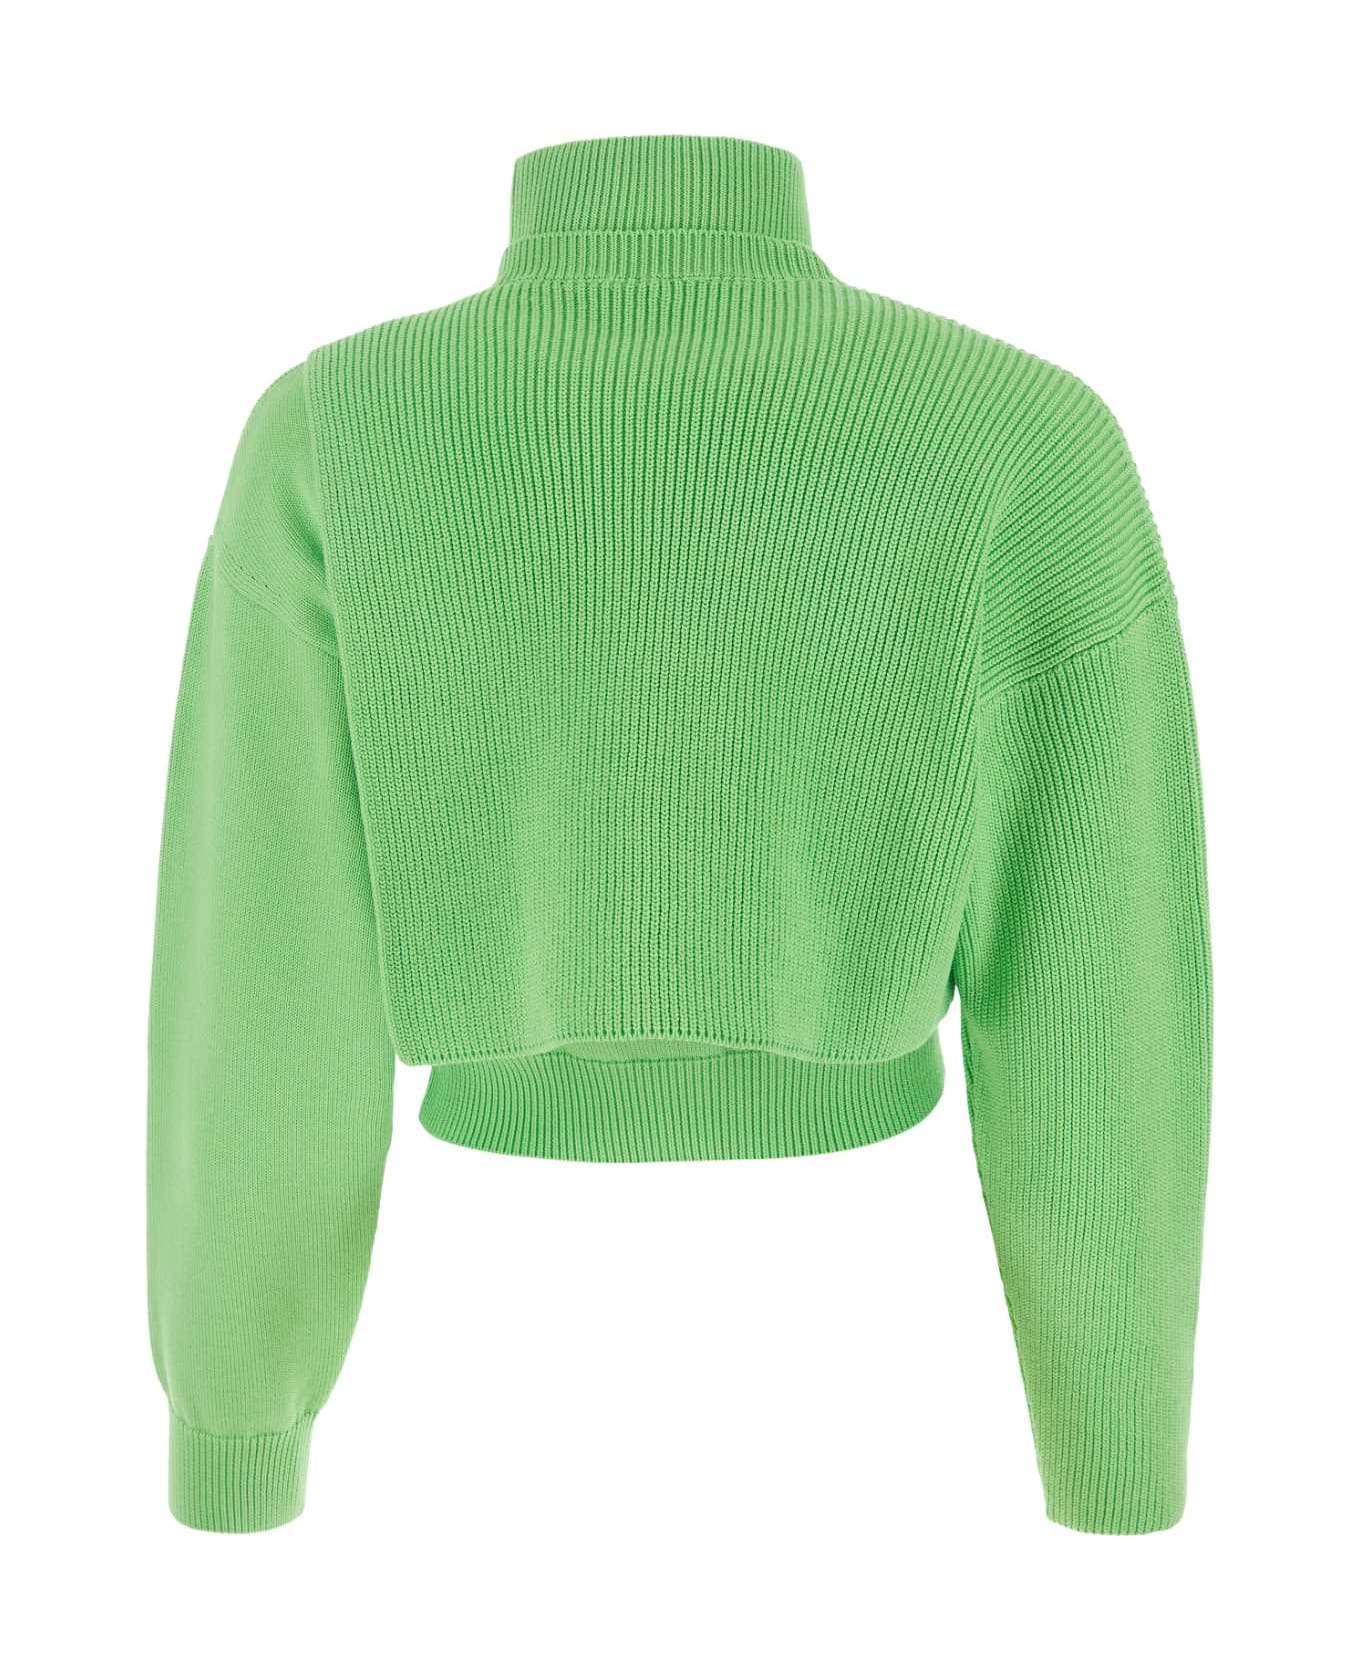 Fendi Light Green Stretch Cotton Sweater - BOUQUET ニットウェア